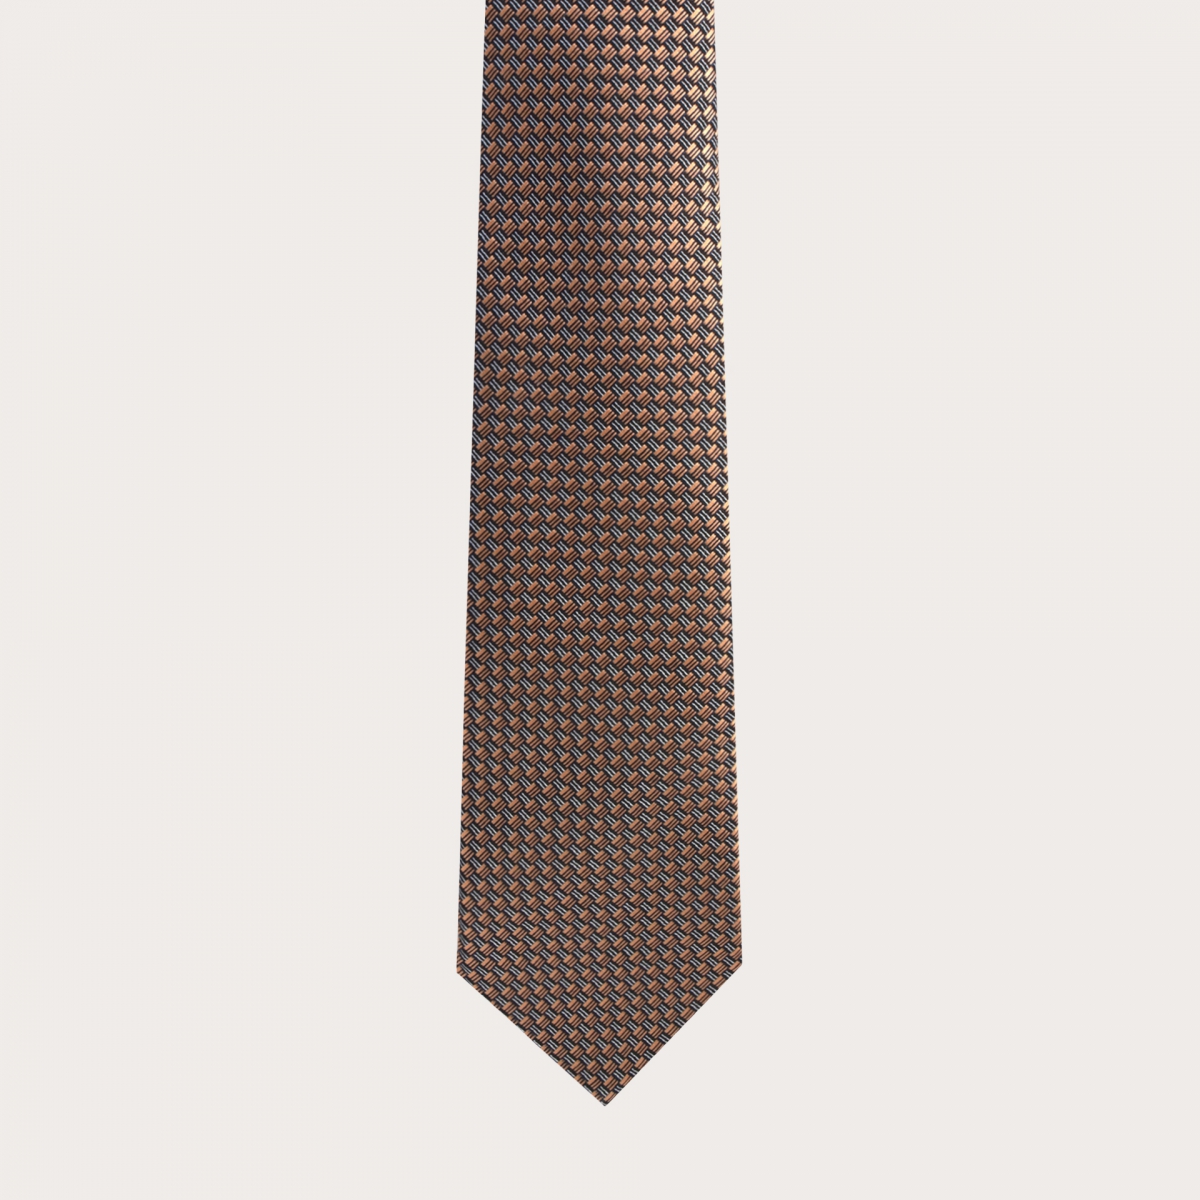 BRUCLE Elegante Krawatte aus Jacquard-Seide, bronzefarbenes Muster